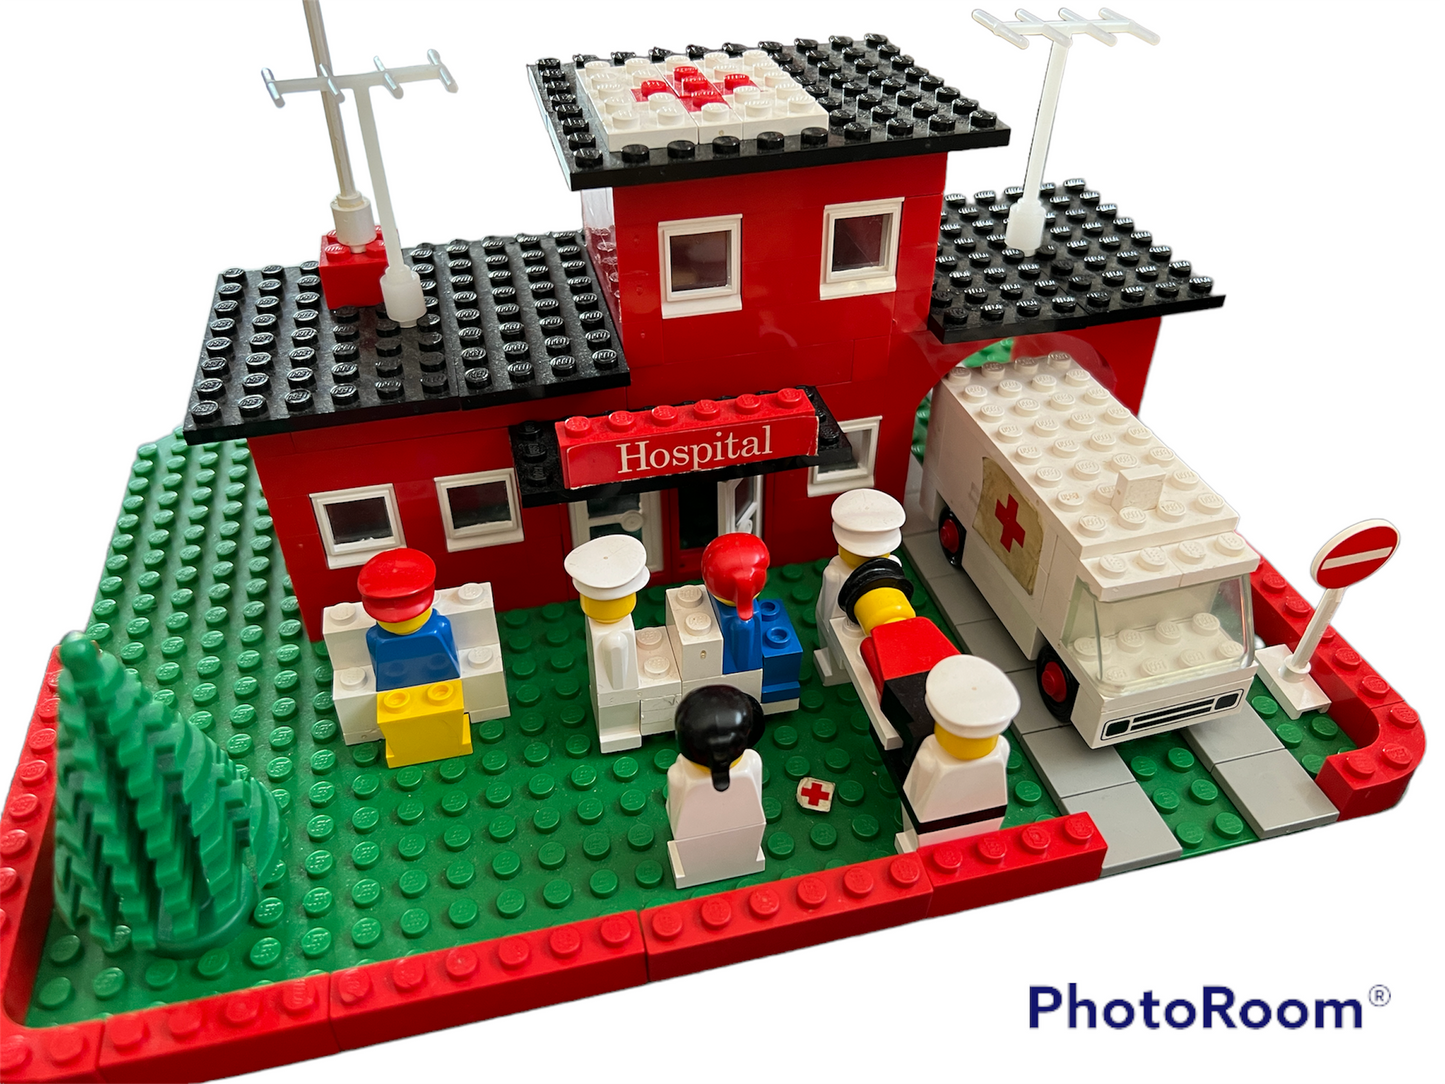 LEGO® set 363 hospitaal & figuren